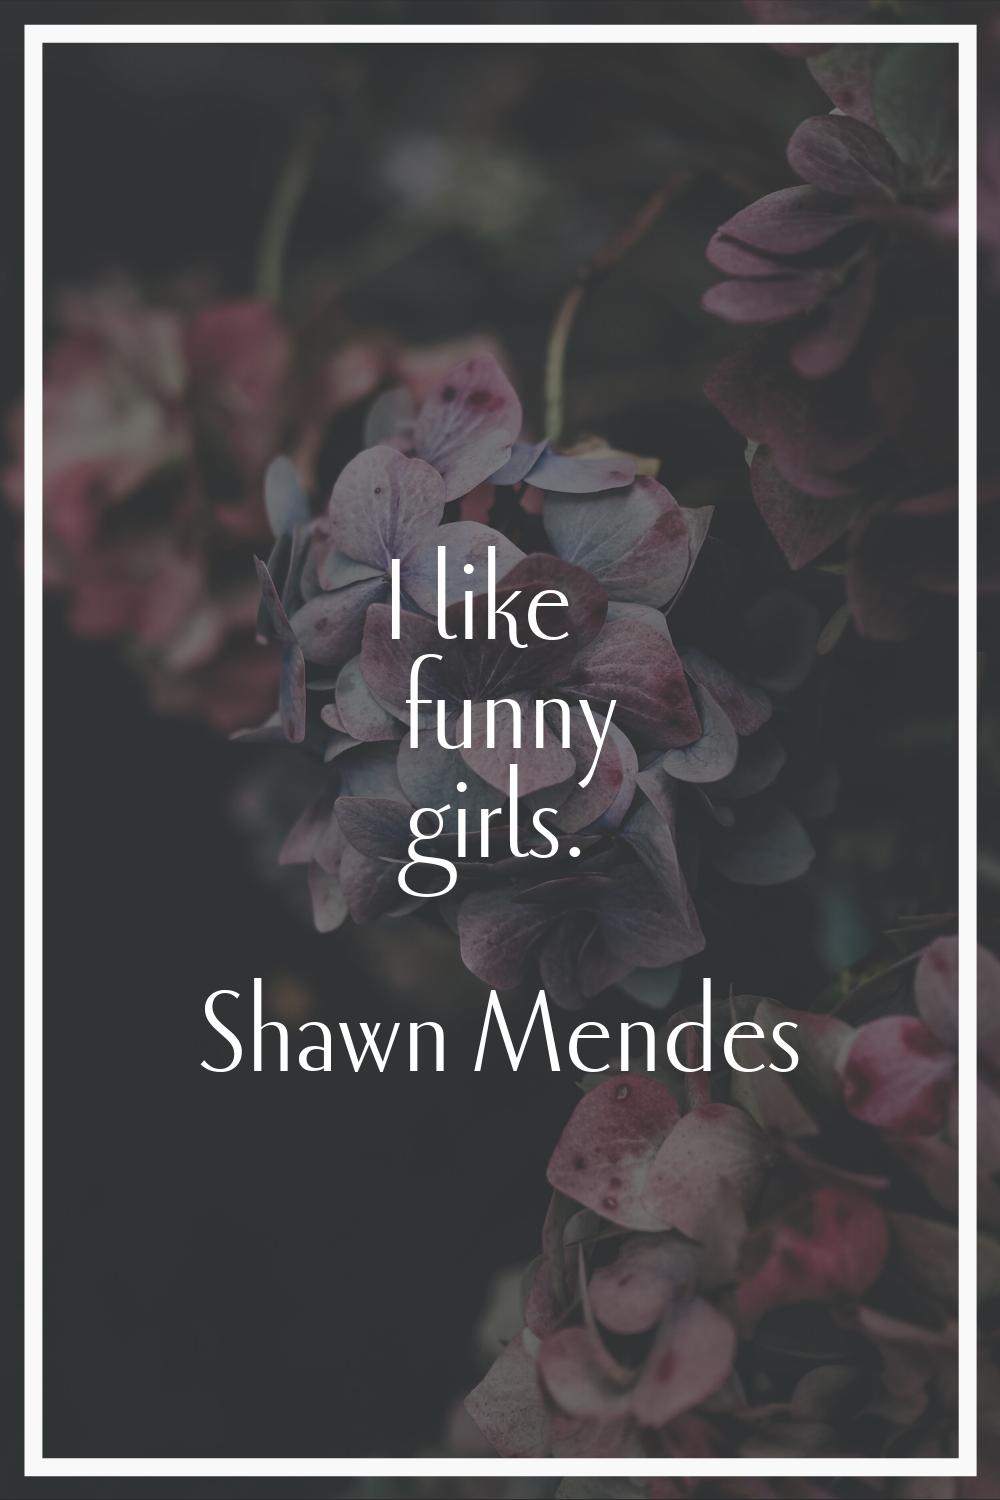 I like funny girls.